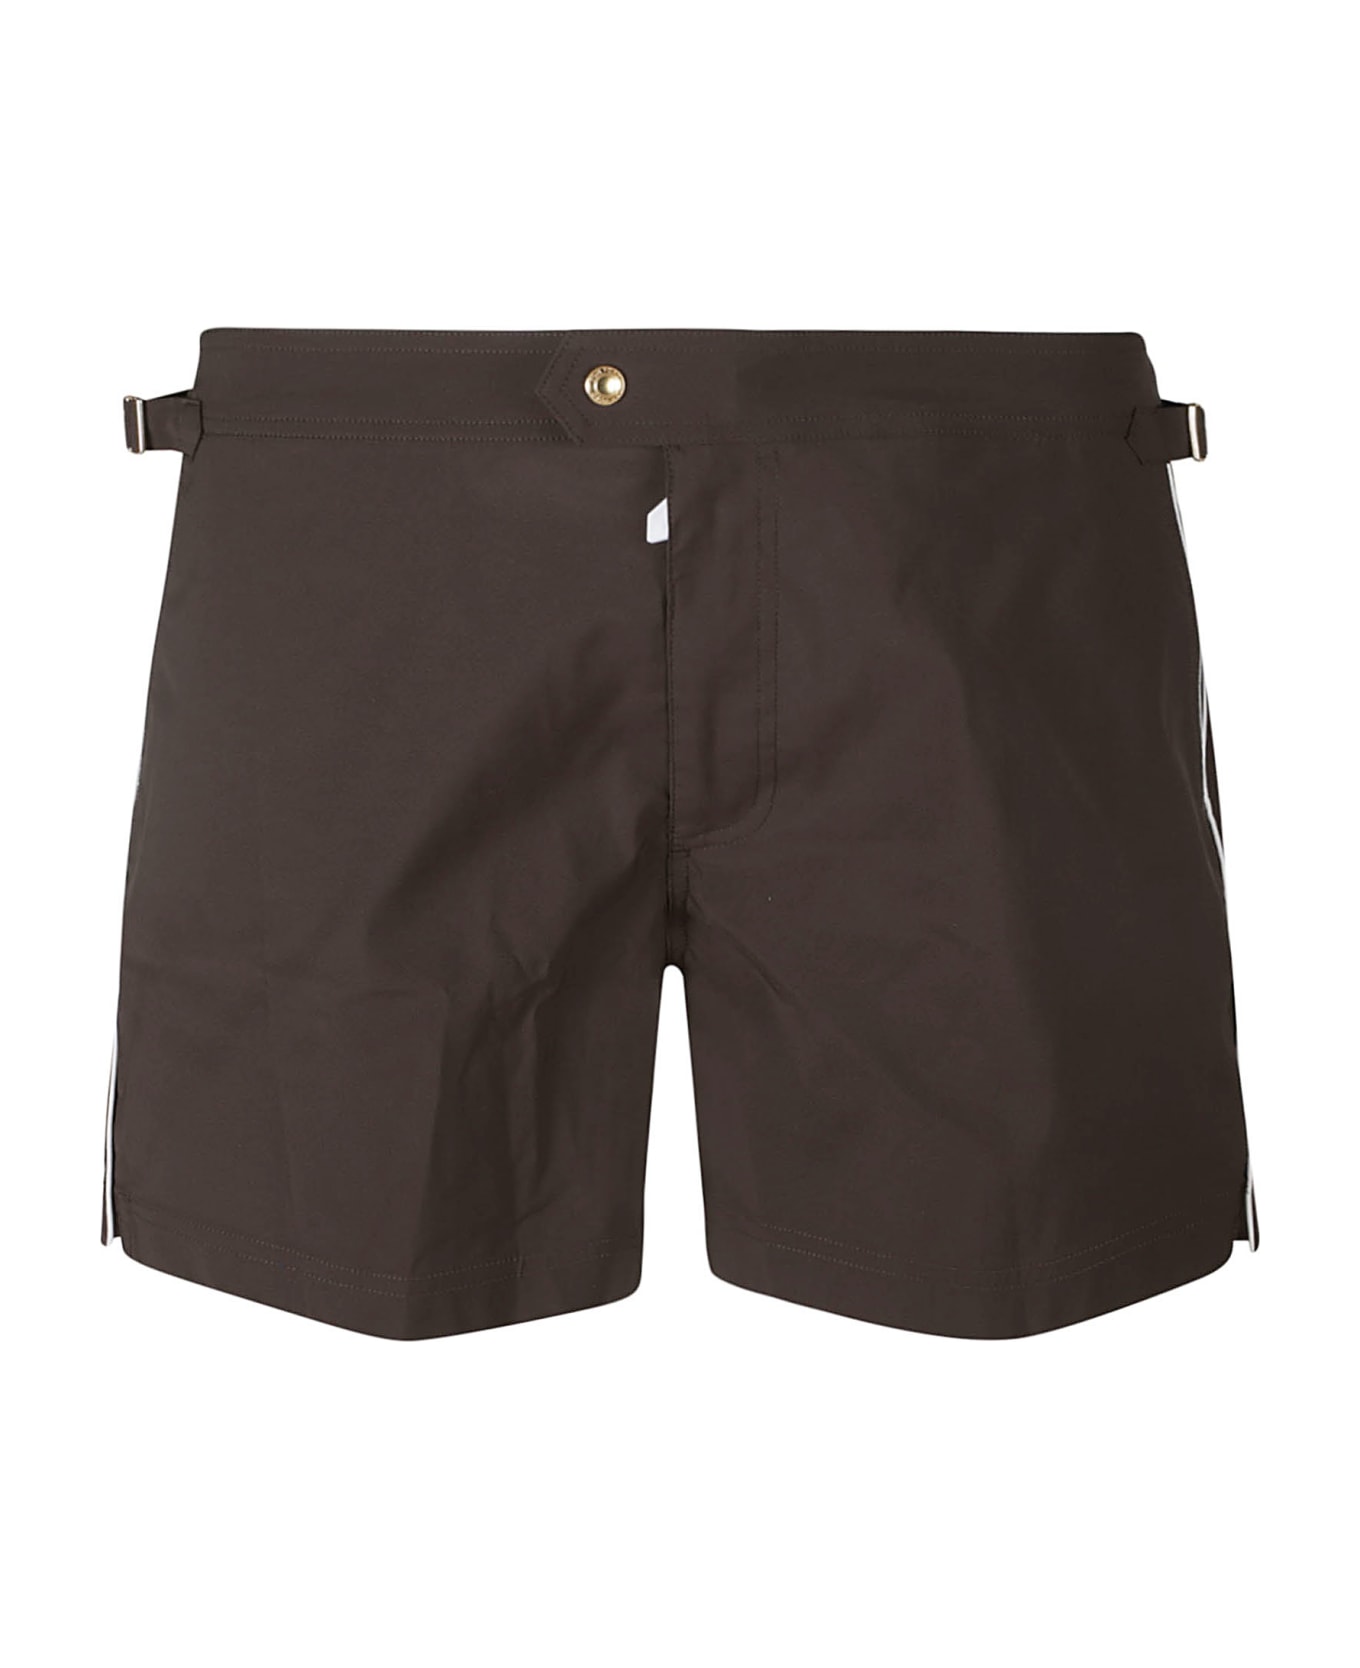 Tom Ford Side Stripe Classic Shorts - Dark Brown/White